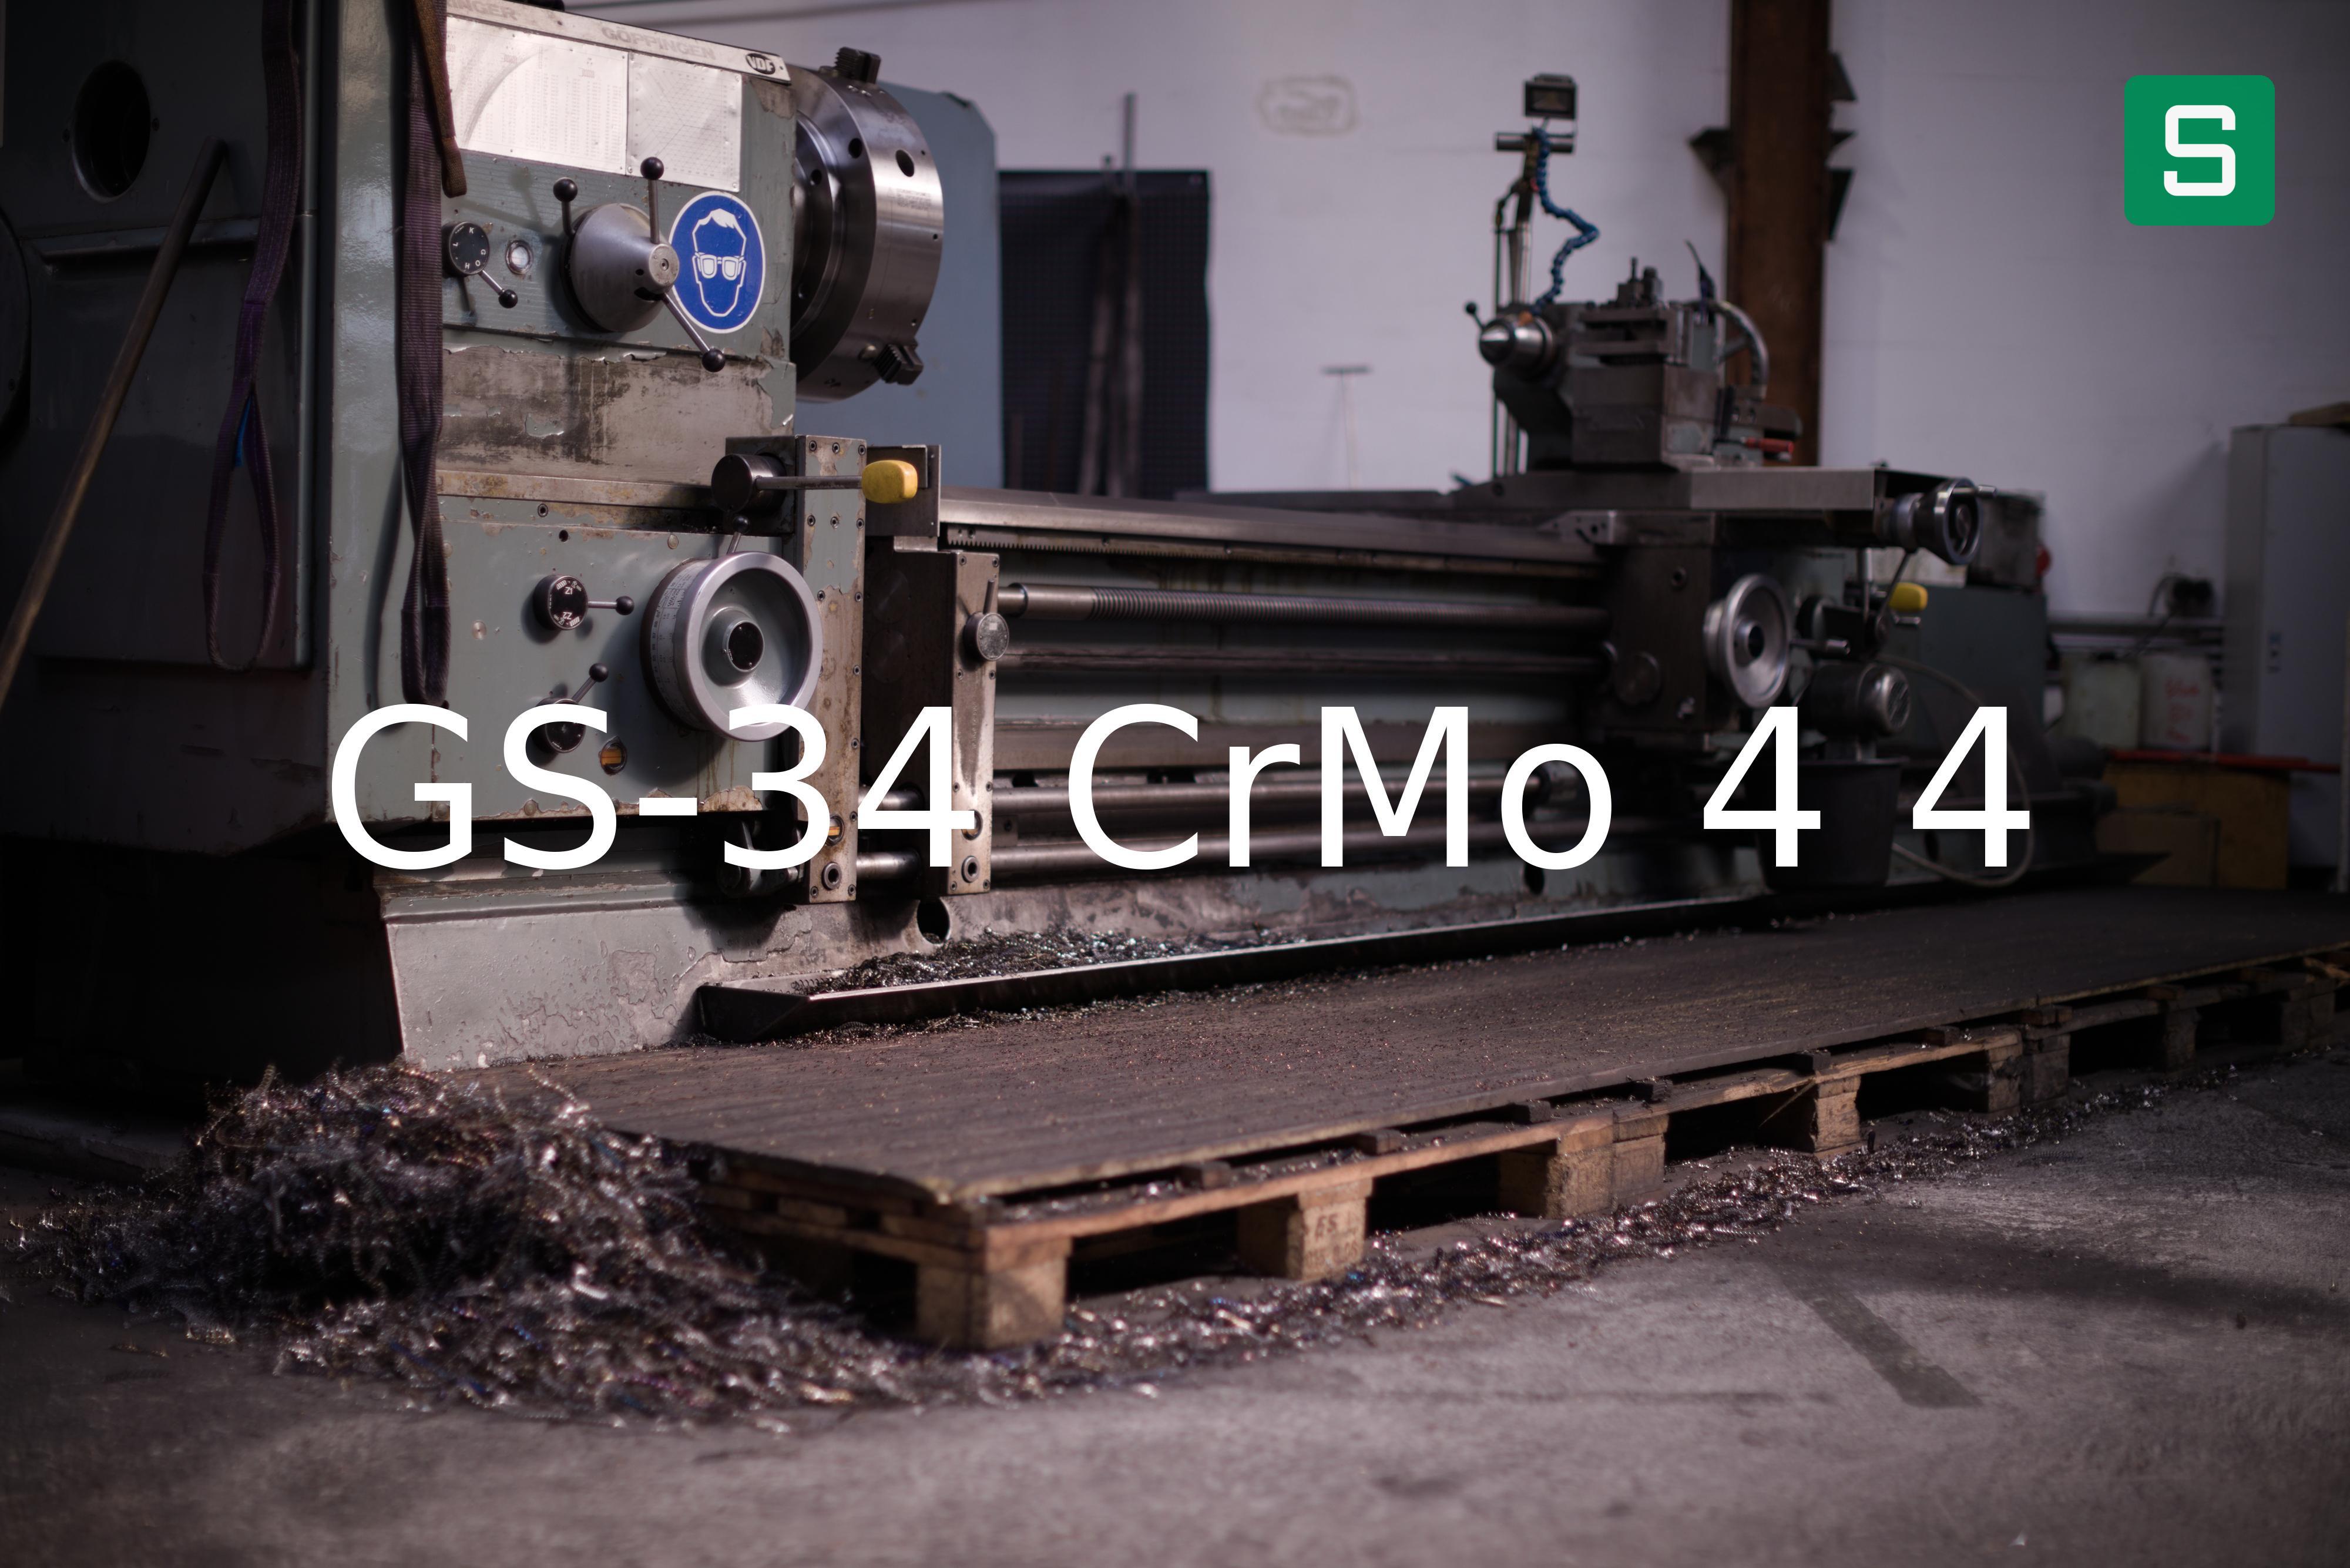 Steel Material: GS-34 CrMo 4 4